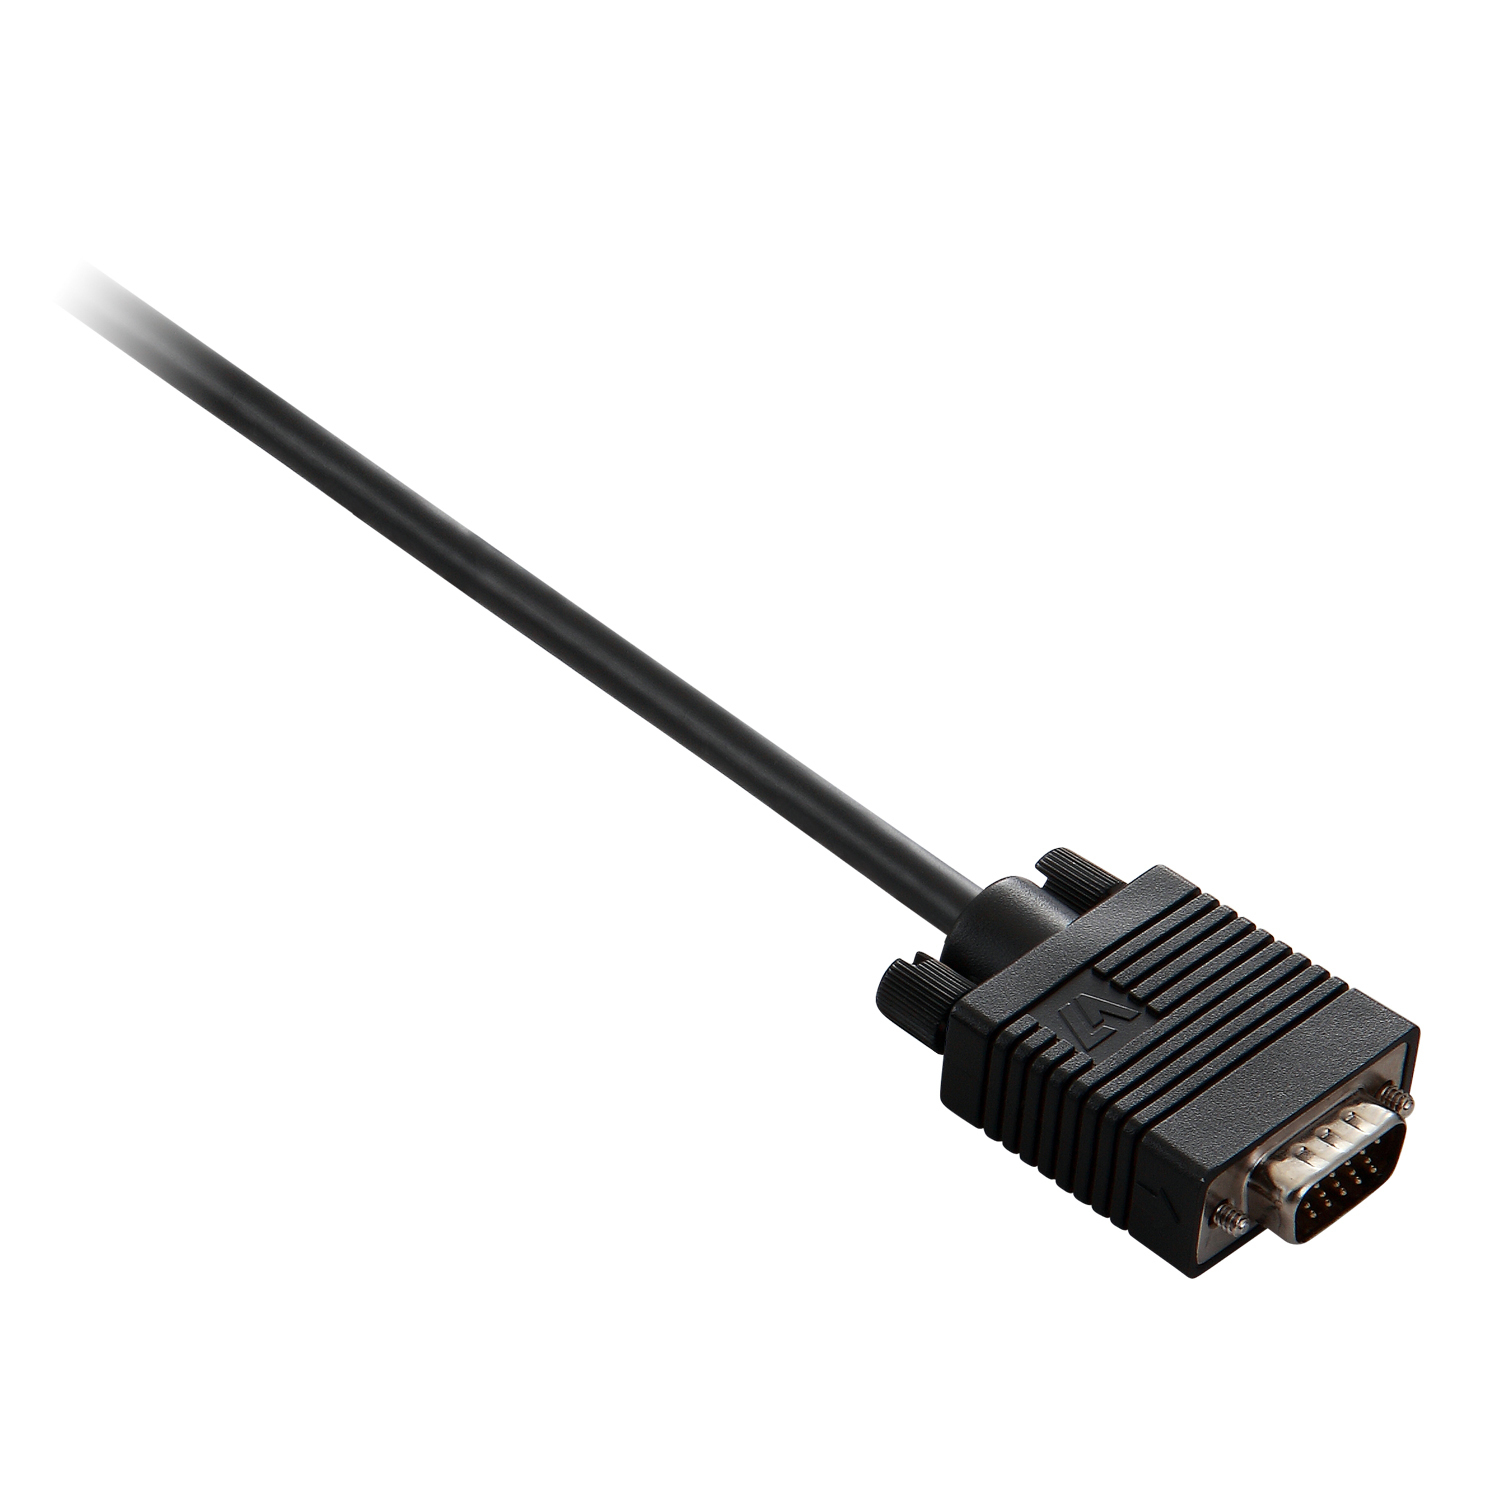 Photos - Cable (video, audio, USB) V7 Black Video Cable VGA Male to VGA Male 5m 16.4ft V7E2VGA-05M-BLK 